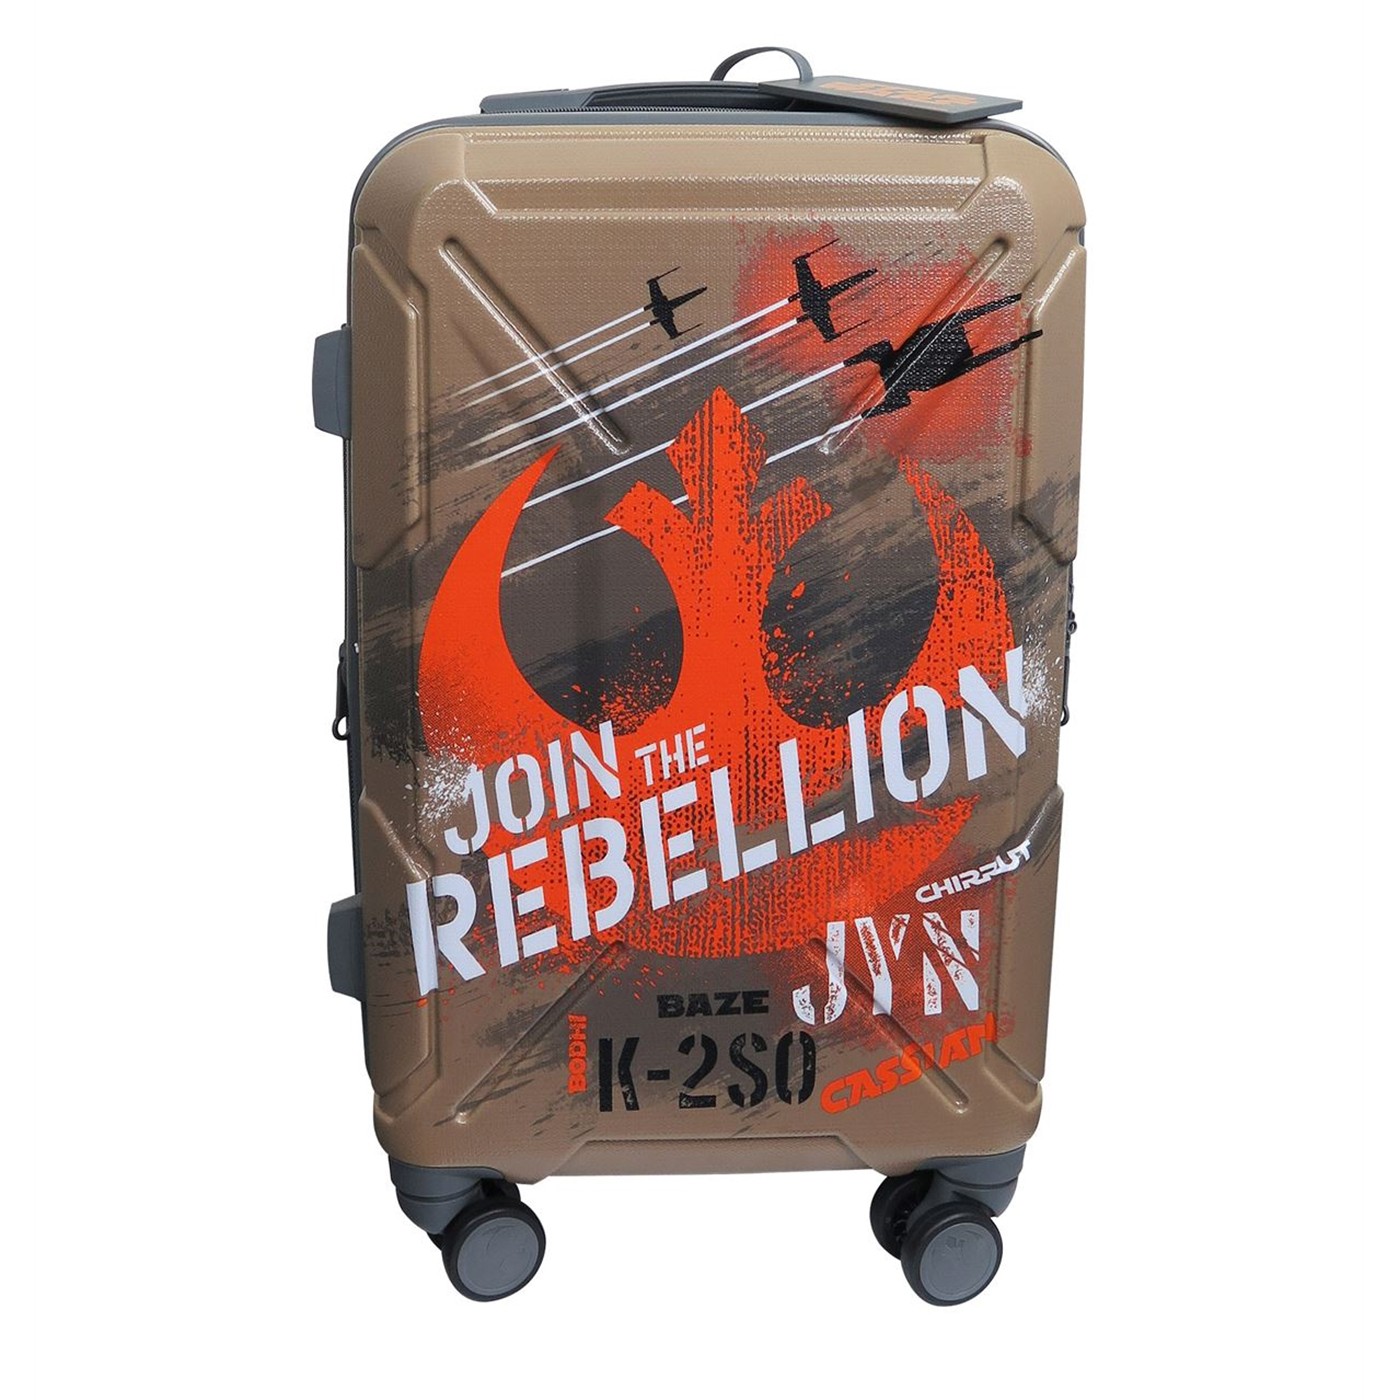 Star Wars Rogue One LTD Rebel Samsonite Suitcase